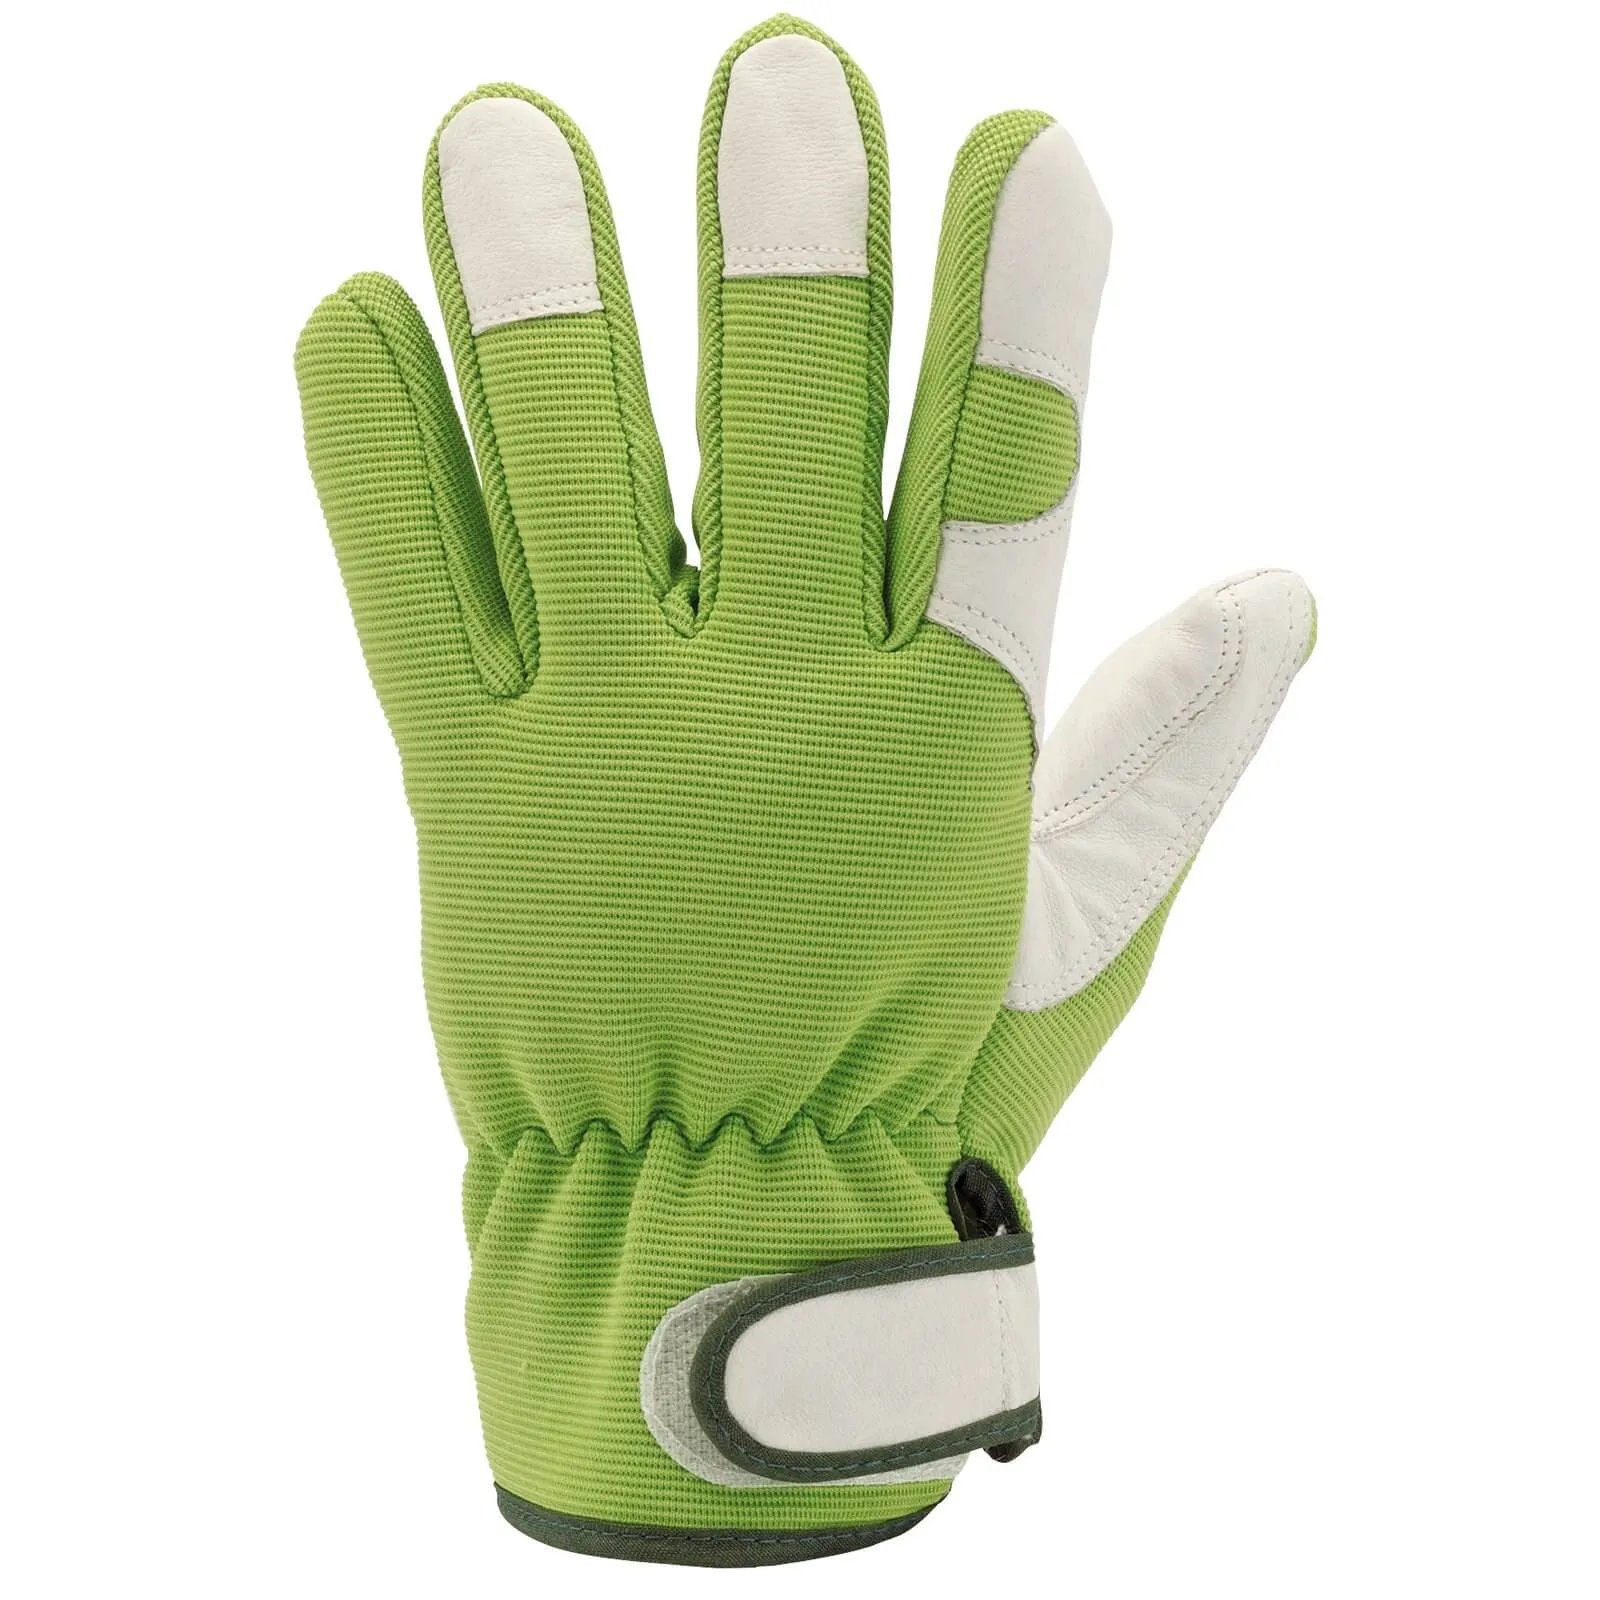 Draper Expert Heavy Duty Garden Gloves - Grey / Green, M